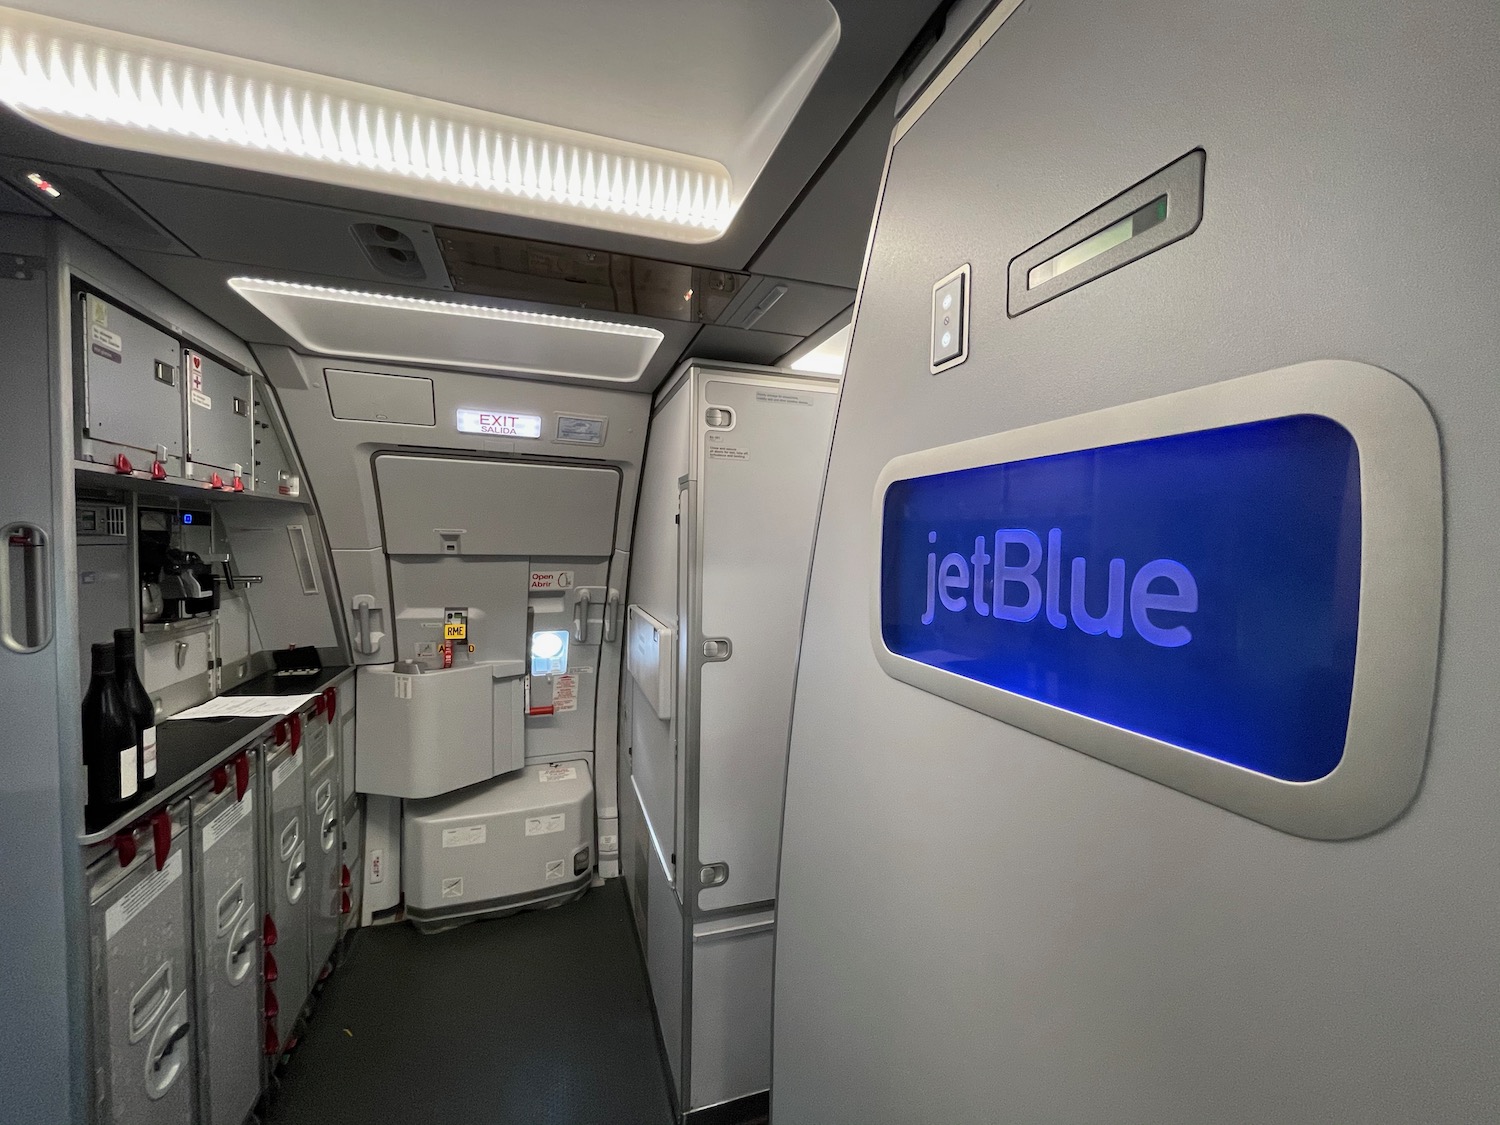 a jet blue sign on a plane